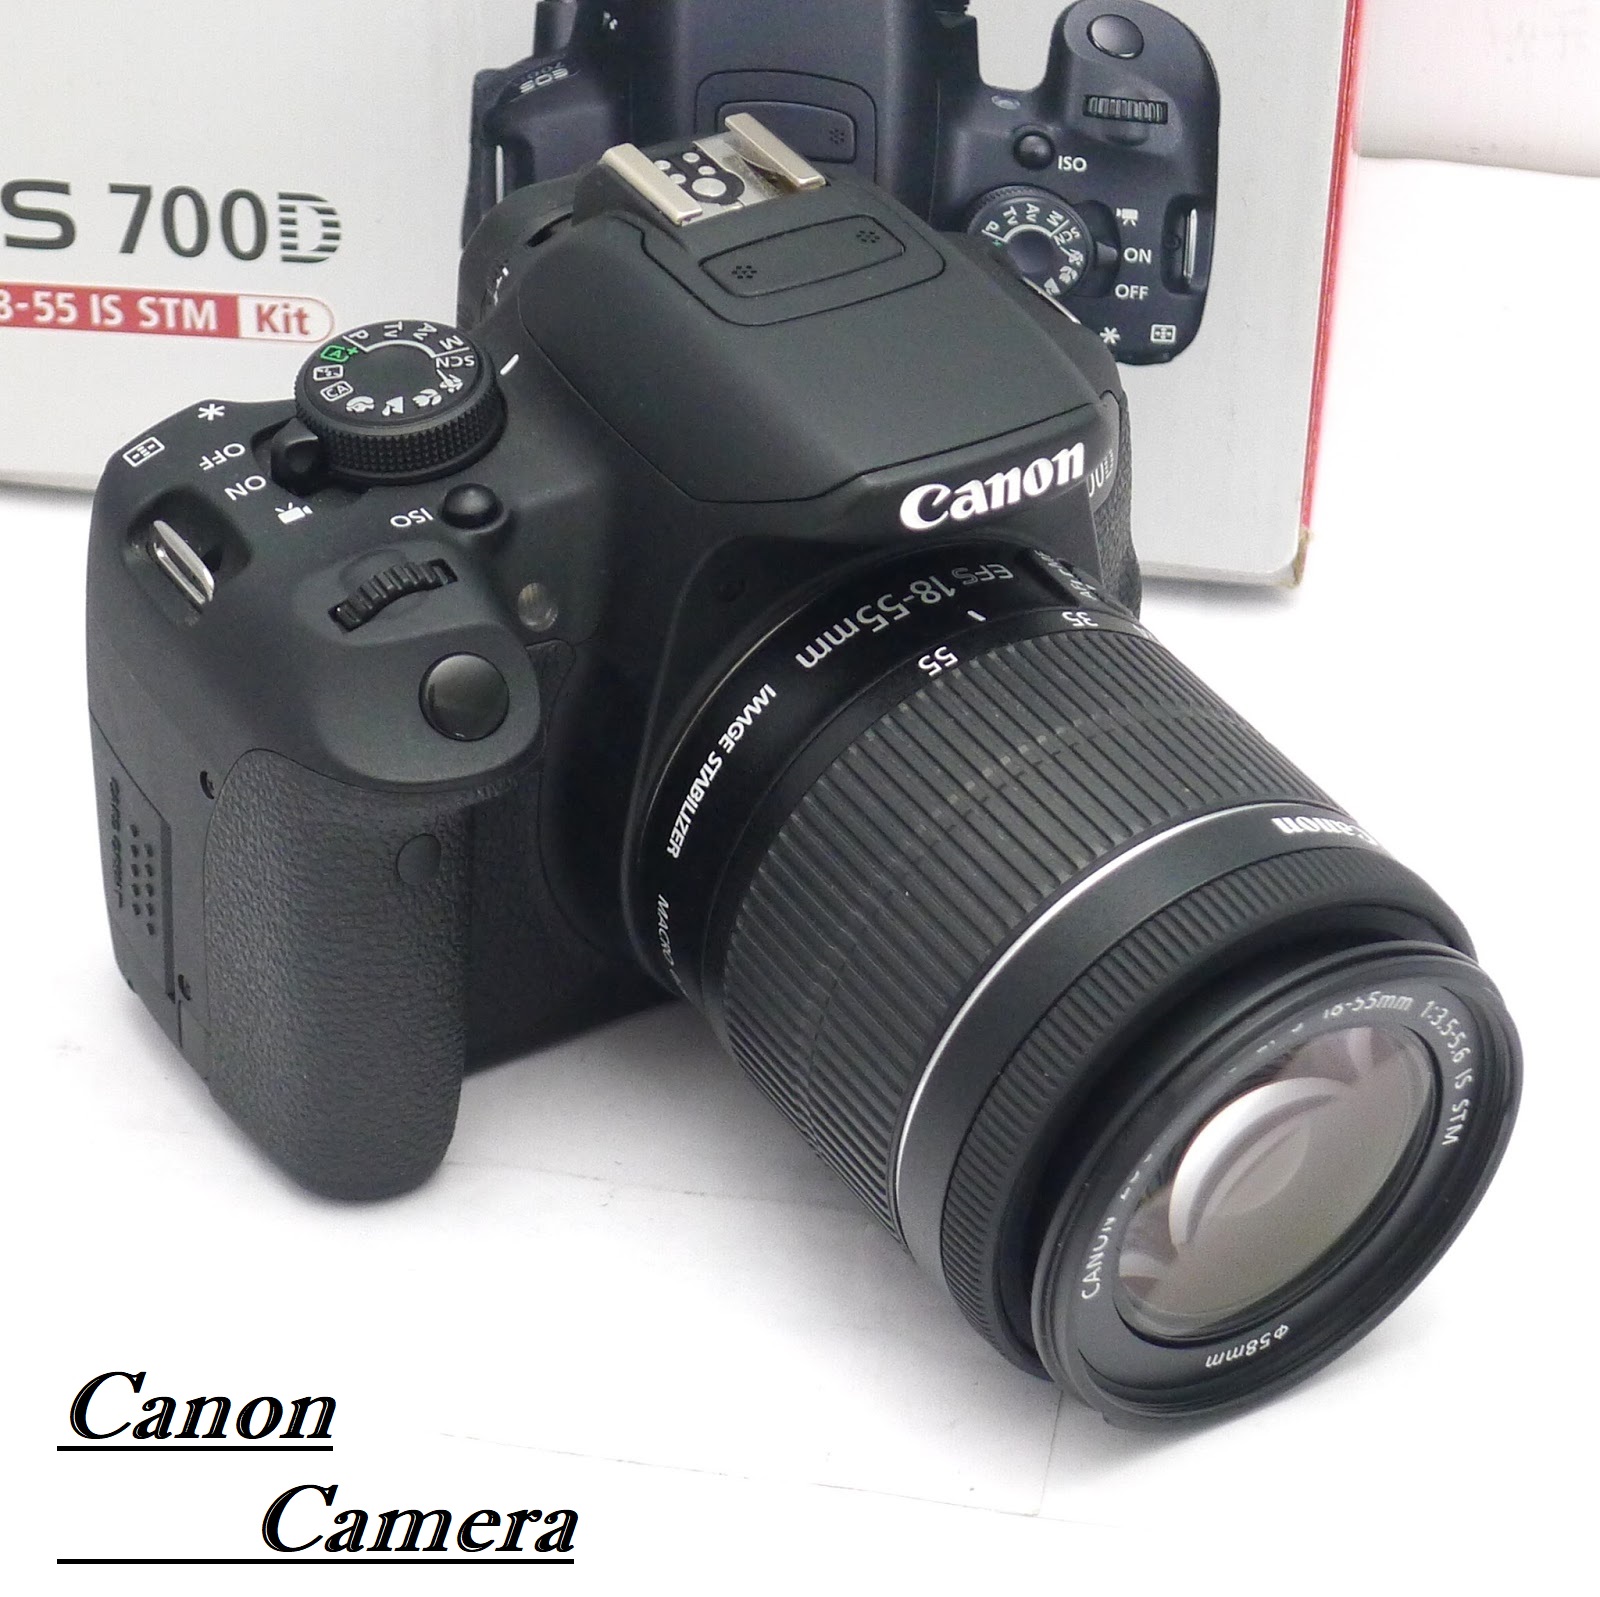 Harga Kamera Canon 700d Bekas 2018